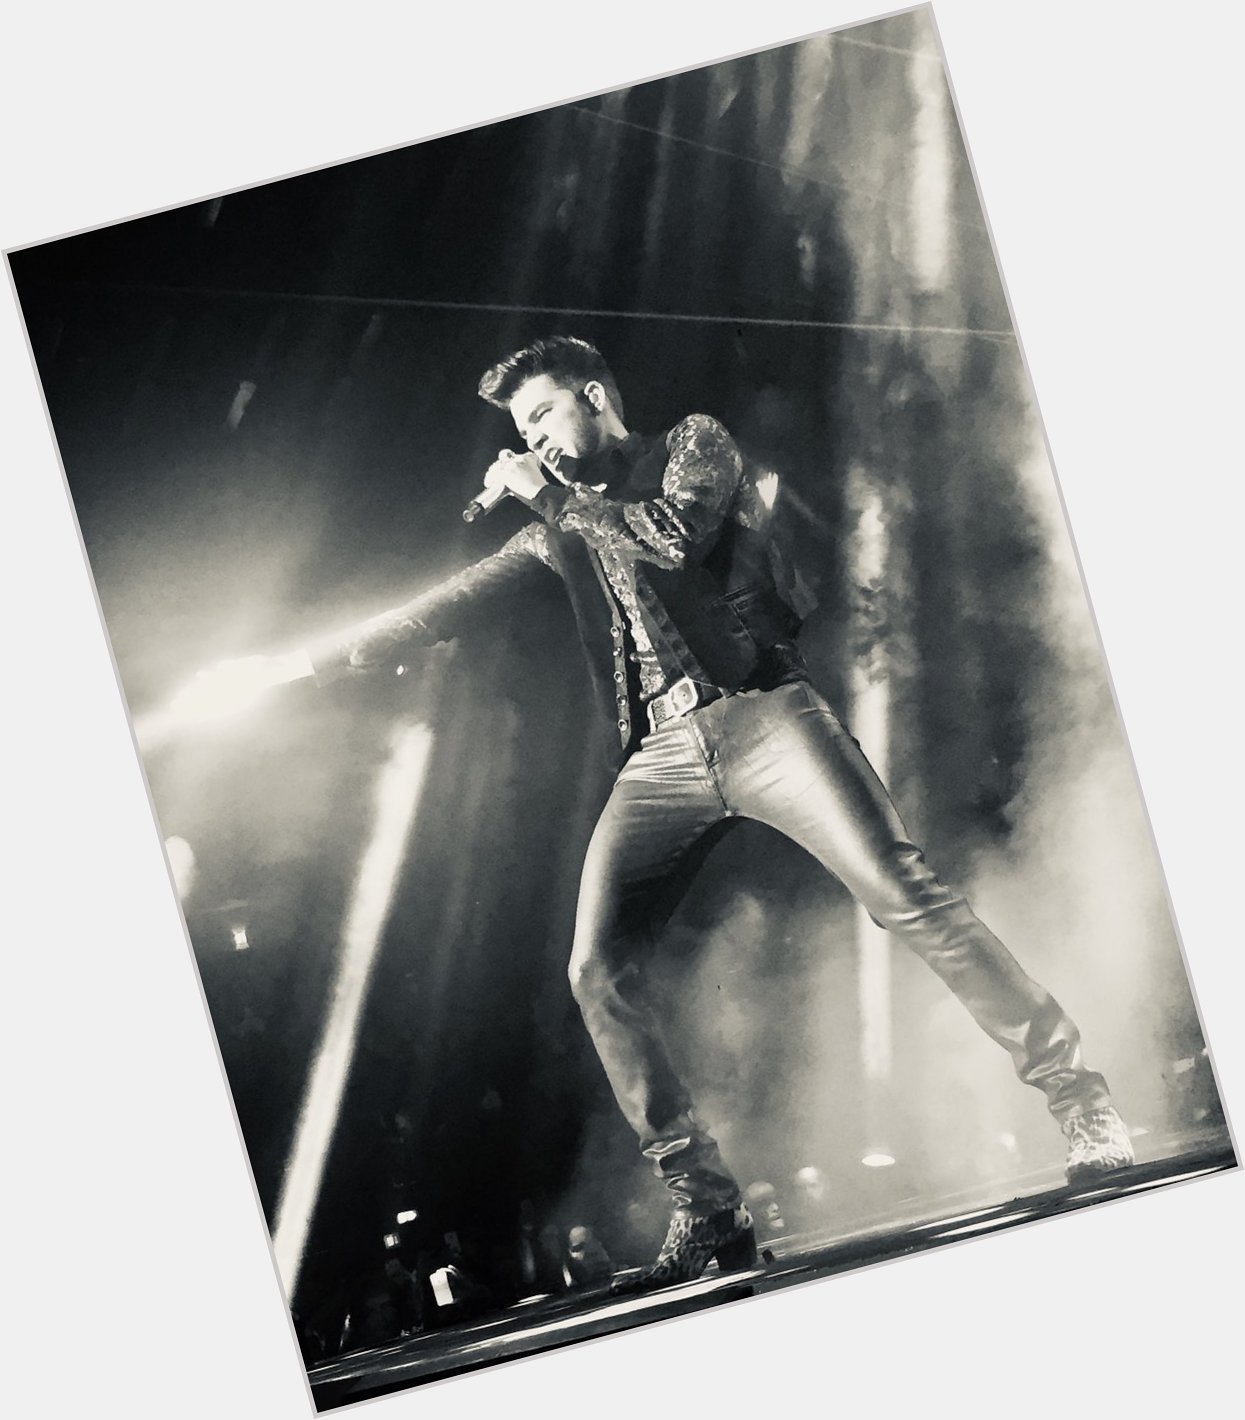 Happy birthday Adam lambert!
photo by ROY
QUEEN+Adam Lambert 2015 Denmark at Herning 